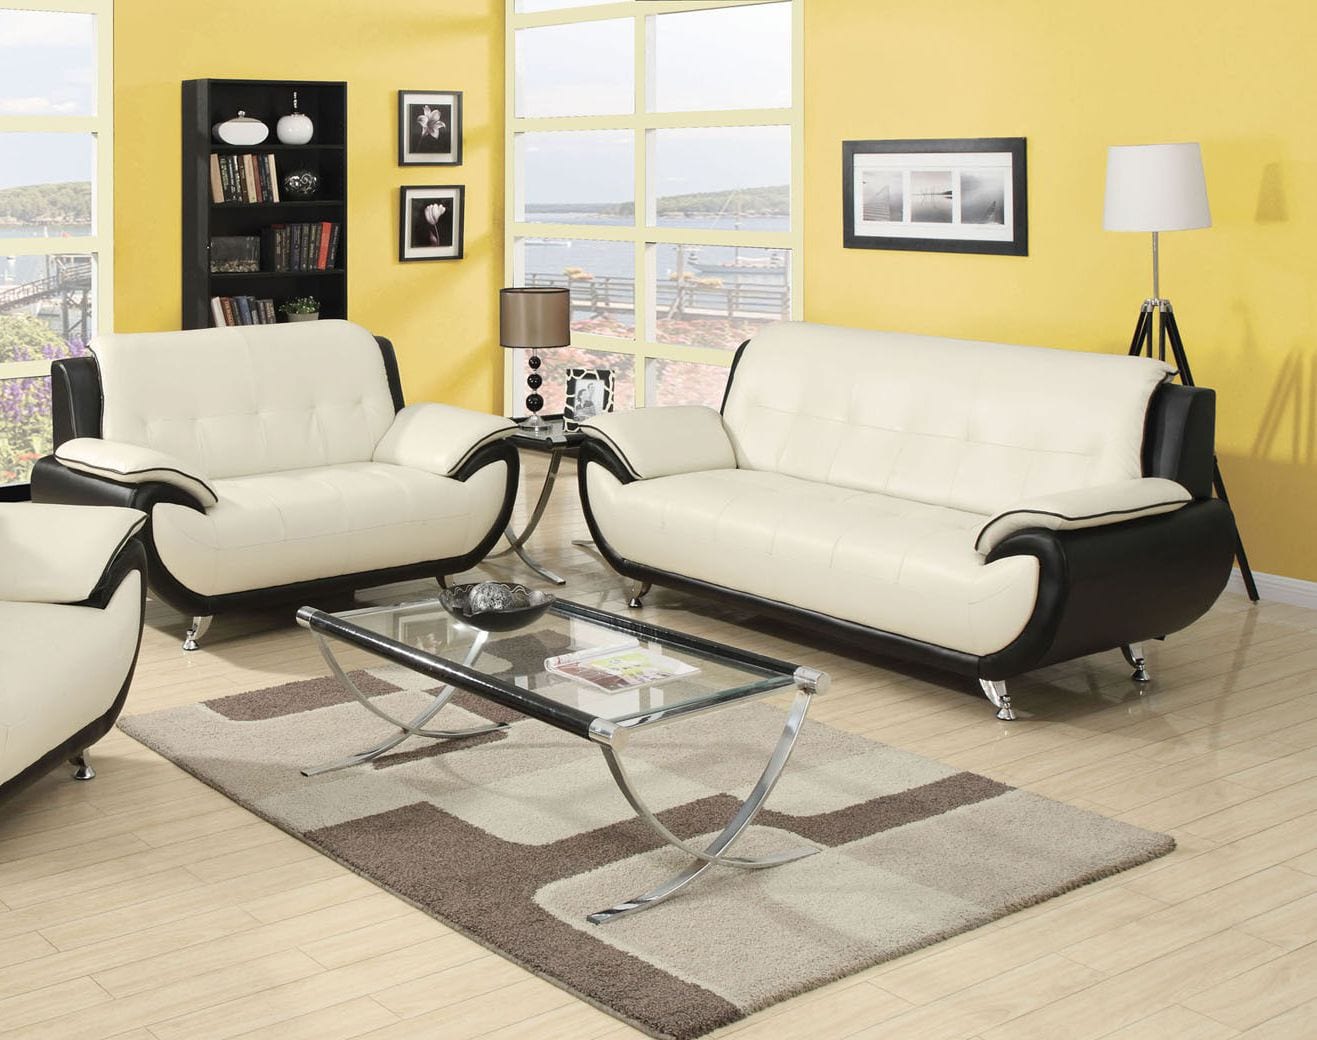 cream bonded leather sofa